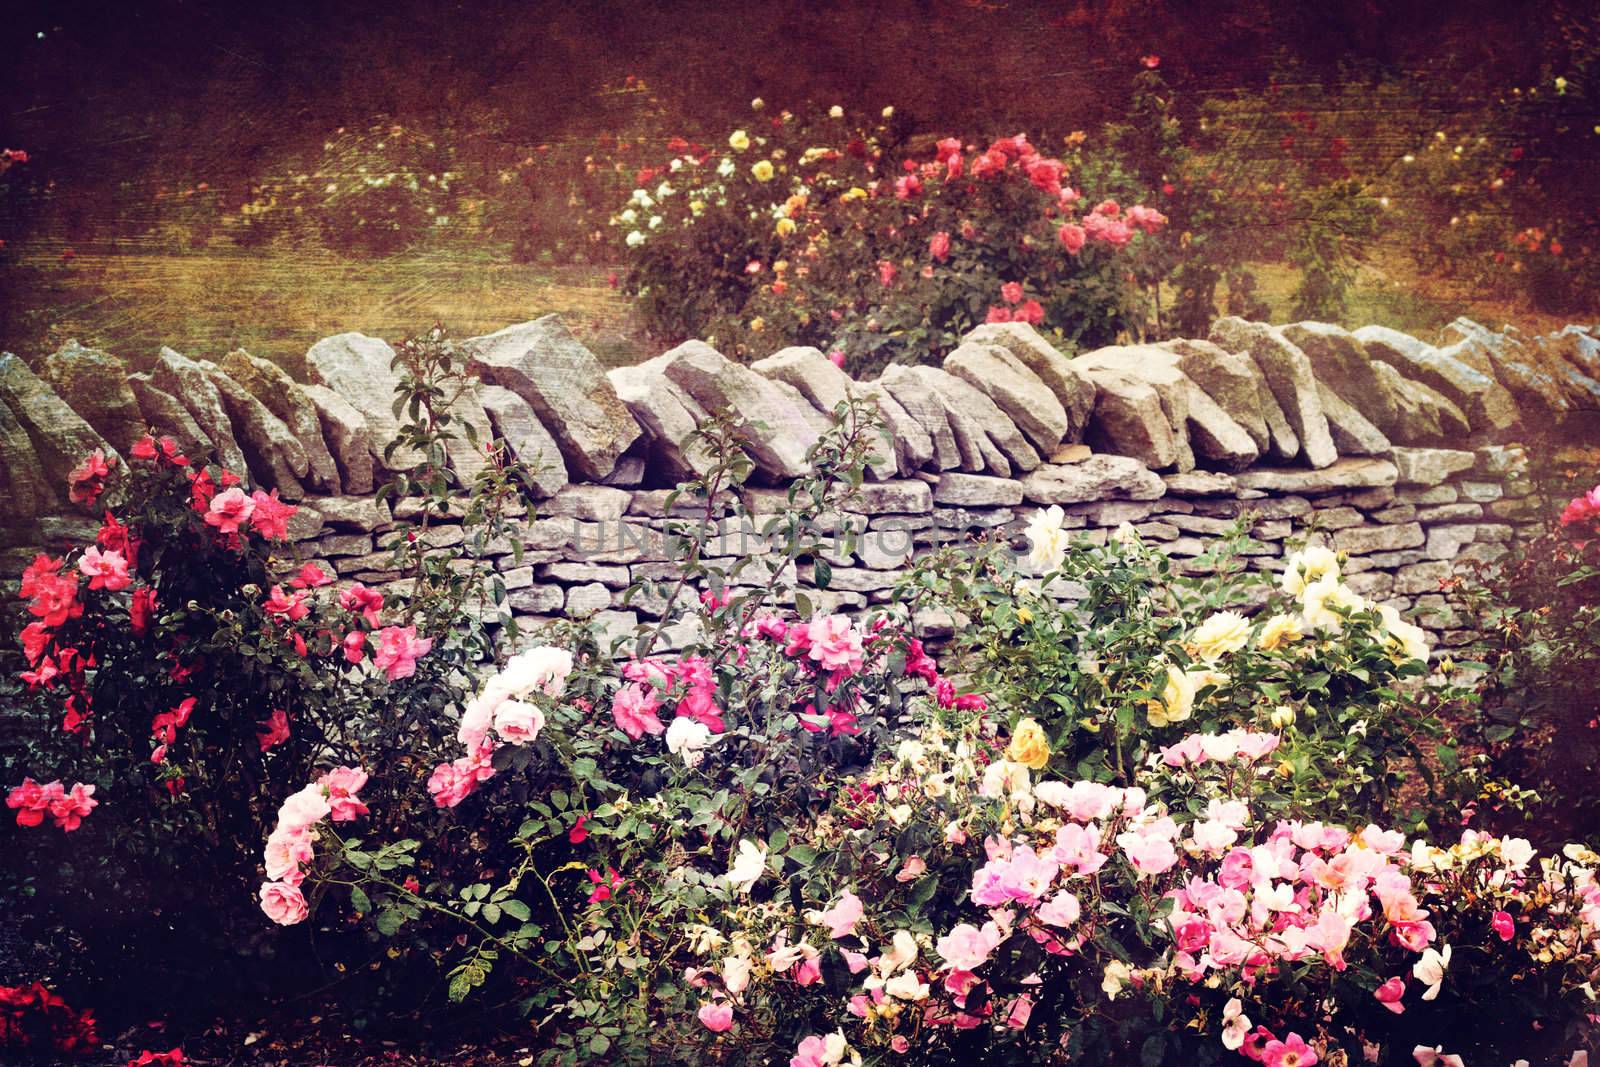 The Rose Garden by StephanieFrey